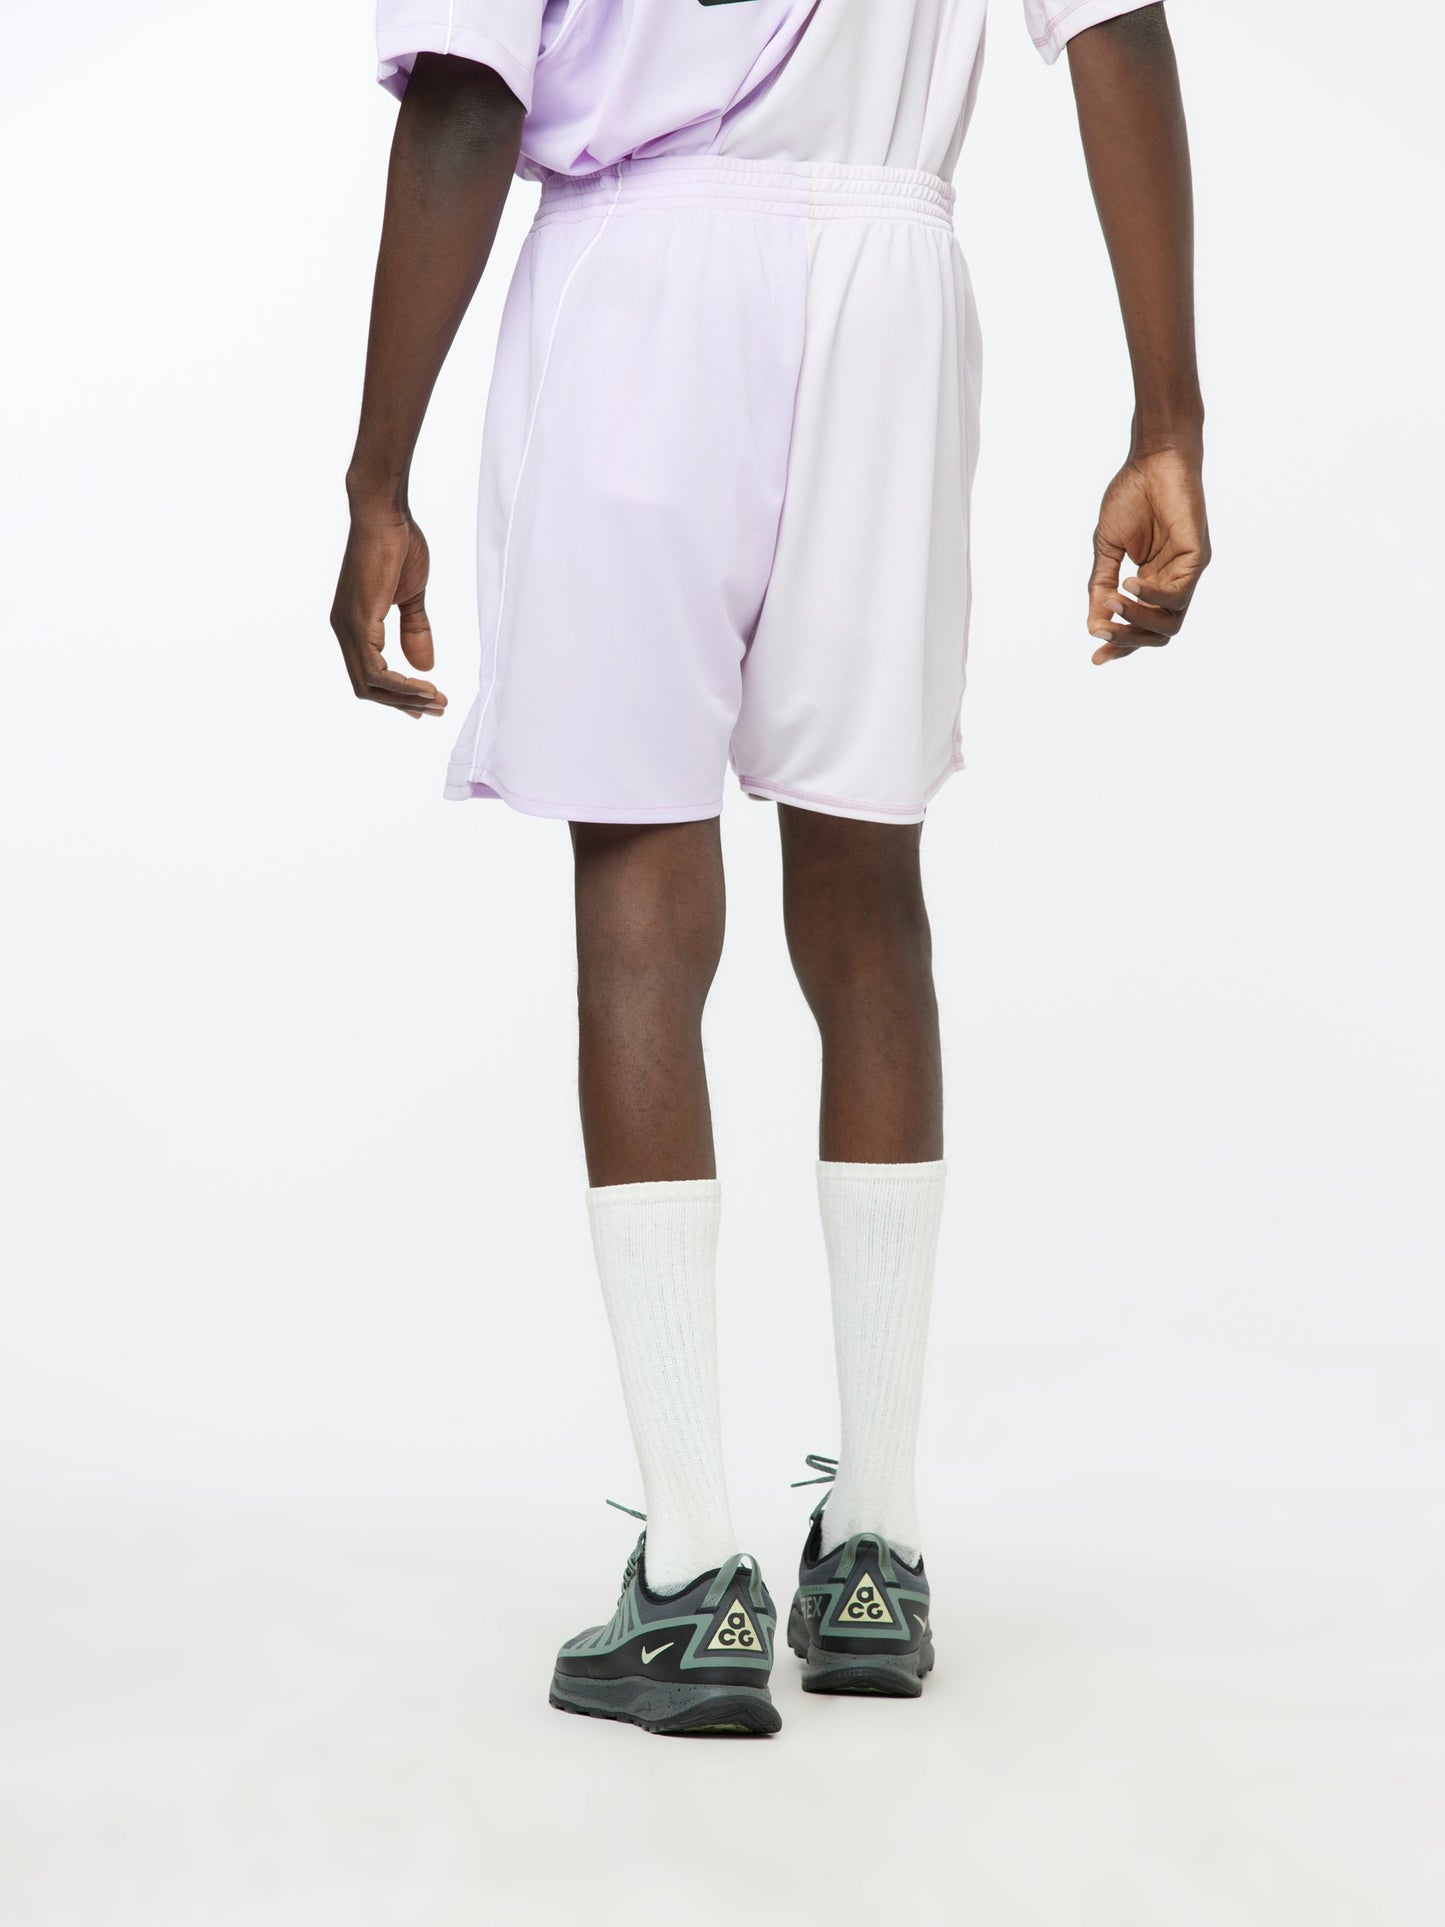 Half & Half Football Shorts (Lilac)